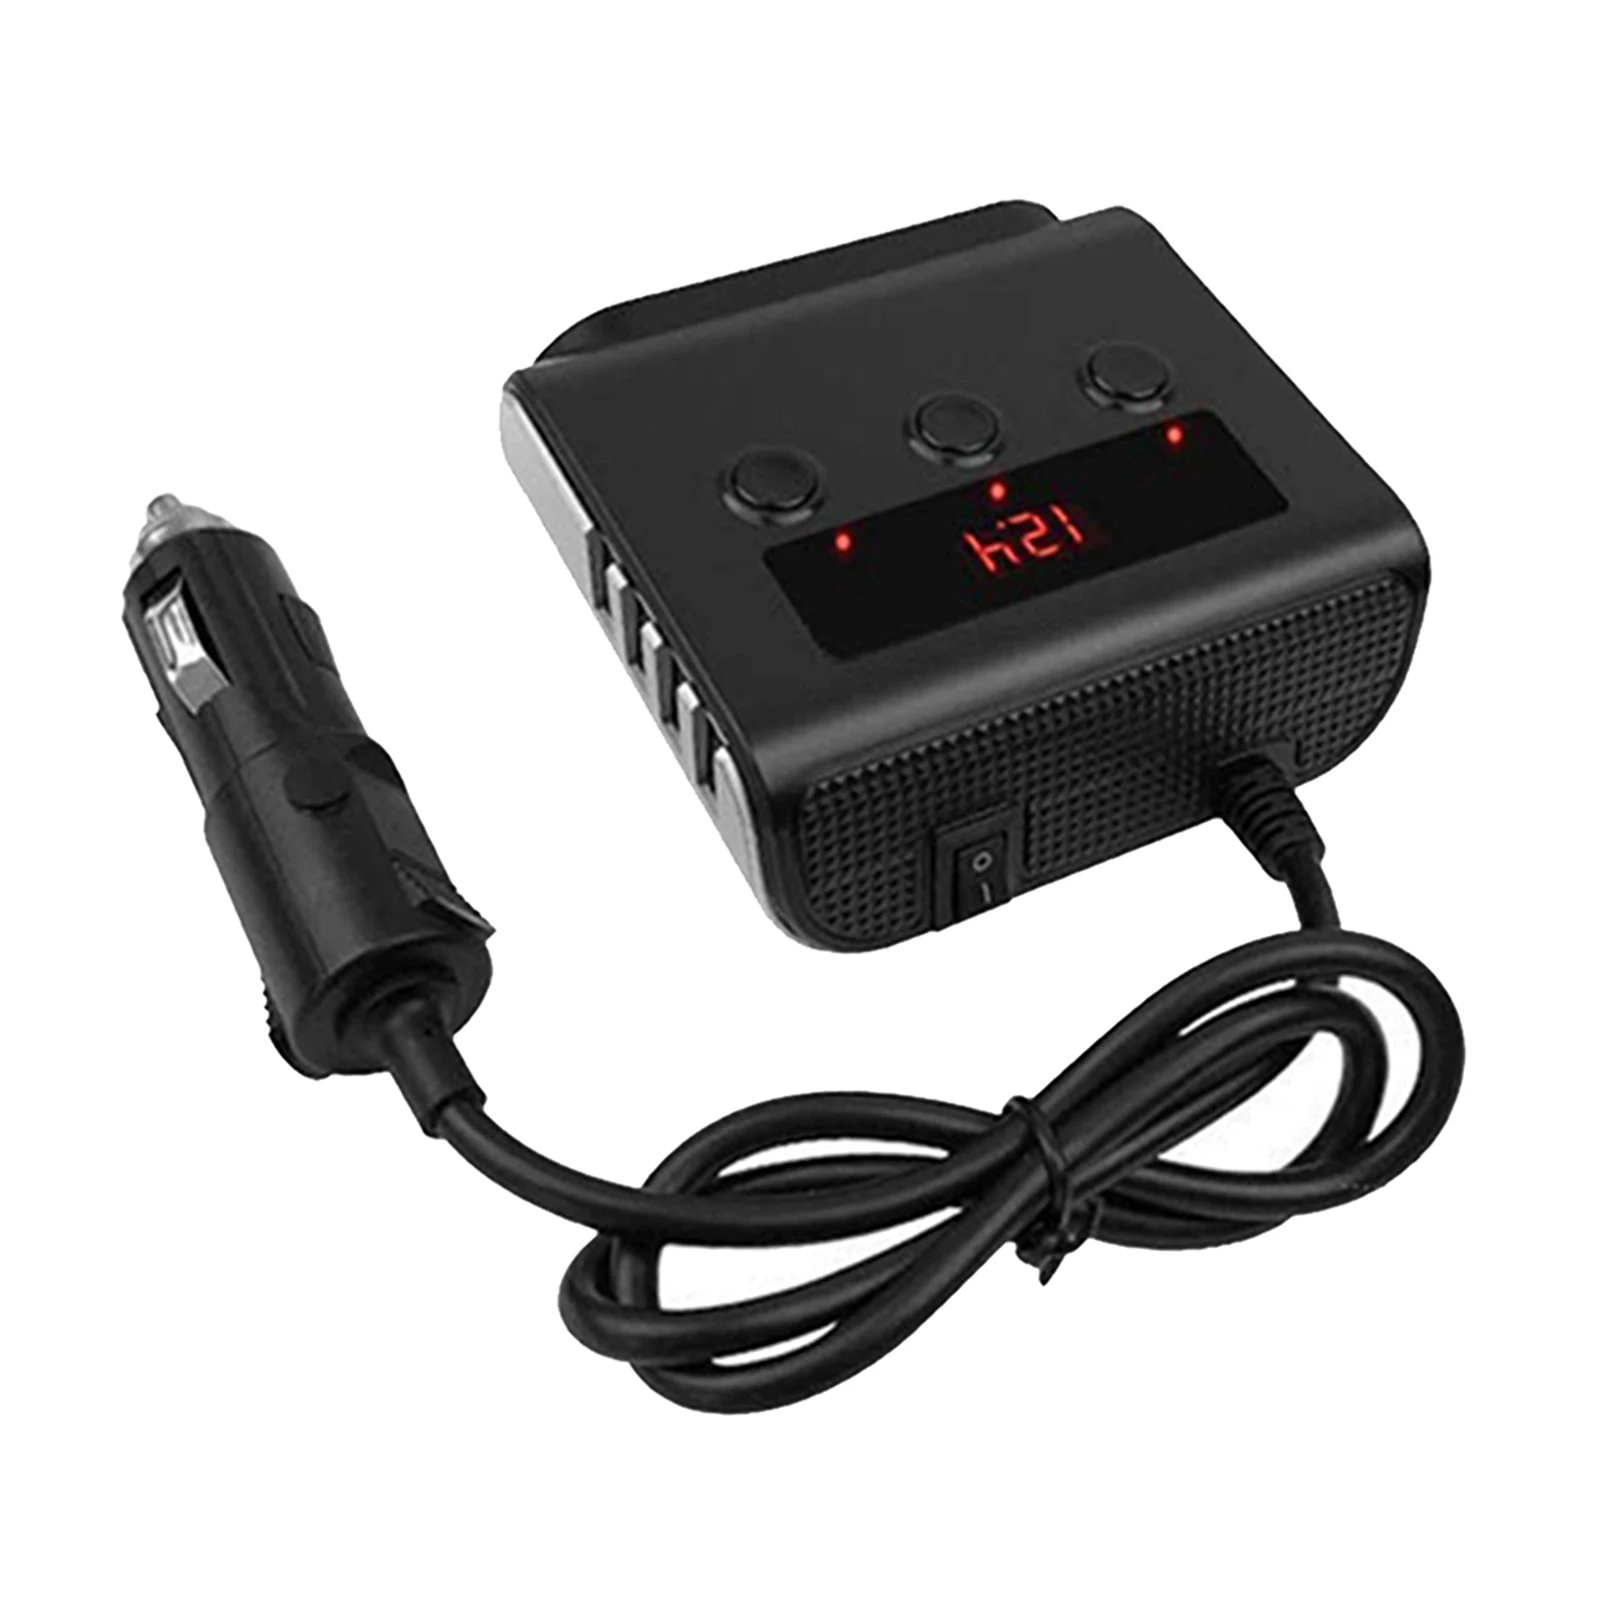 Car Automobile Cigarette Lighter Adapter 12V/24V DC Power Adaptor with Replace Fuse Voltage Display for GPS Dashcam